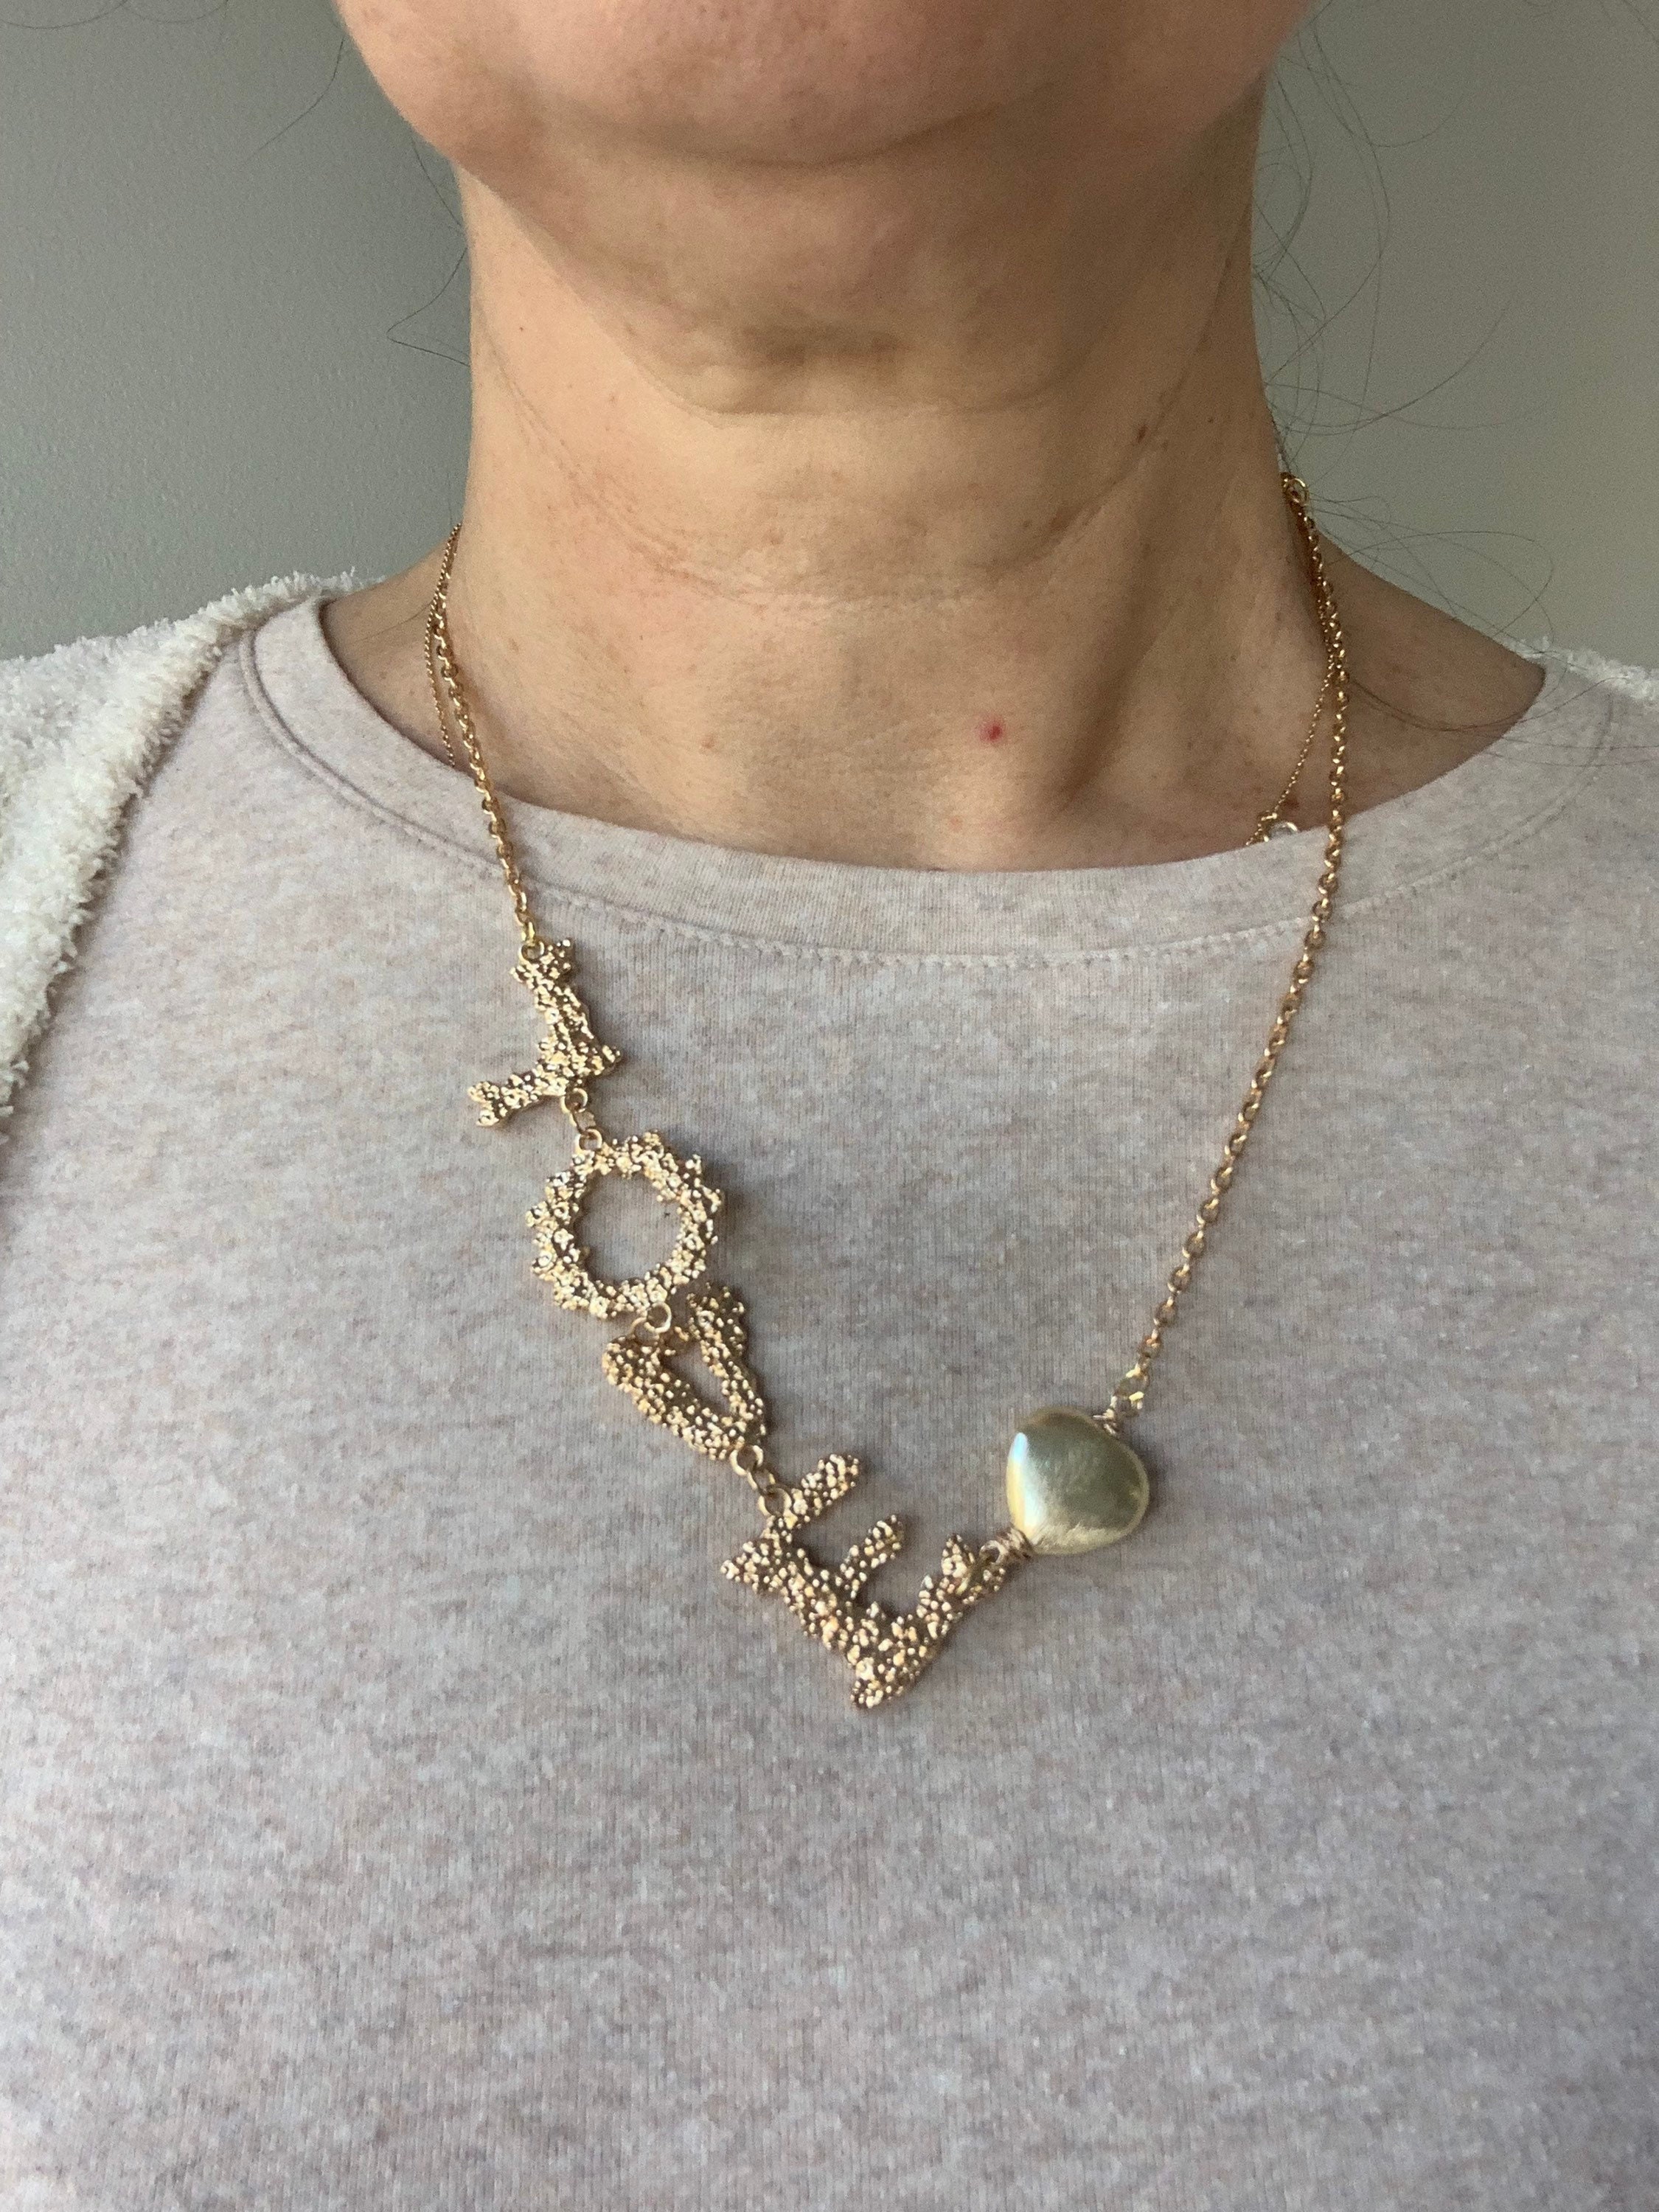 Kay Couple's Initial Necklace | Hamilton Place